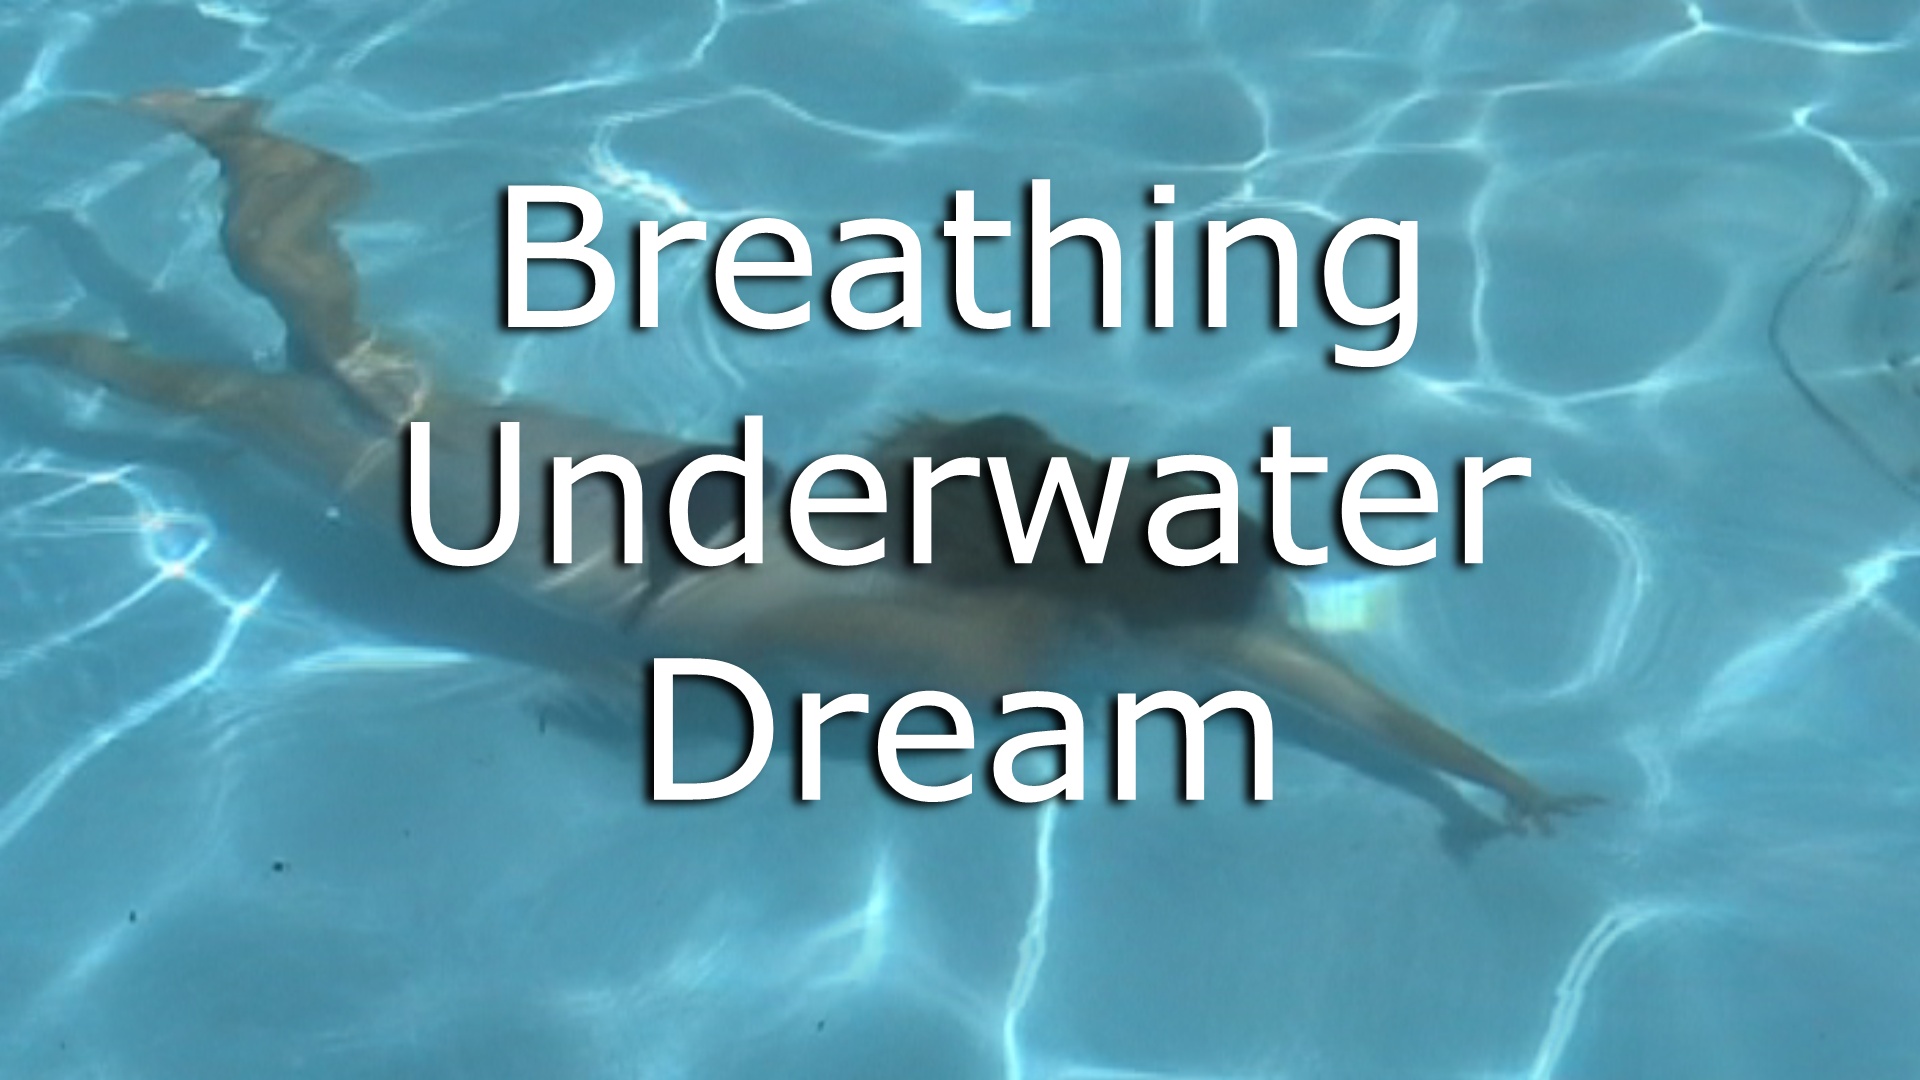 when you dream of breathing underwater